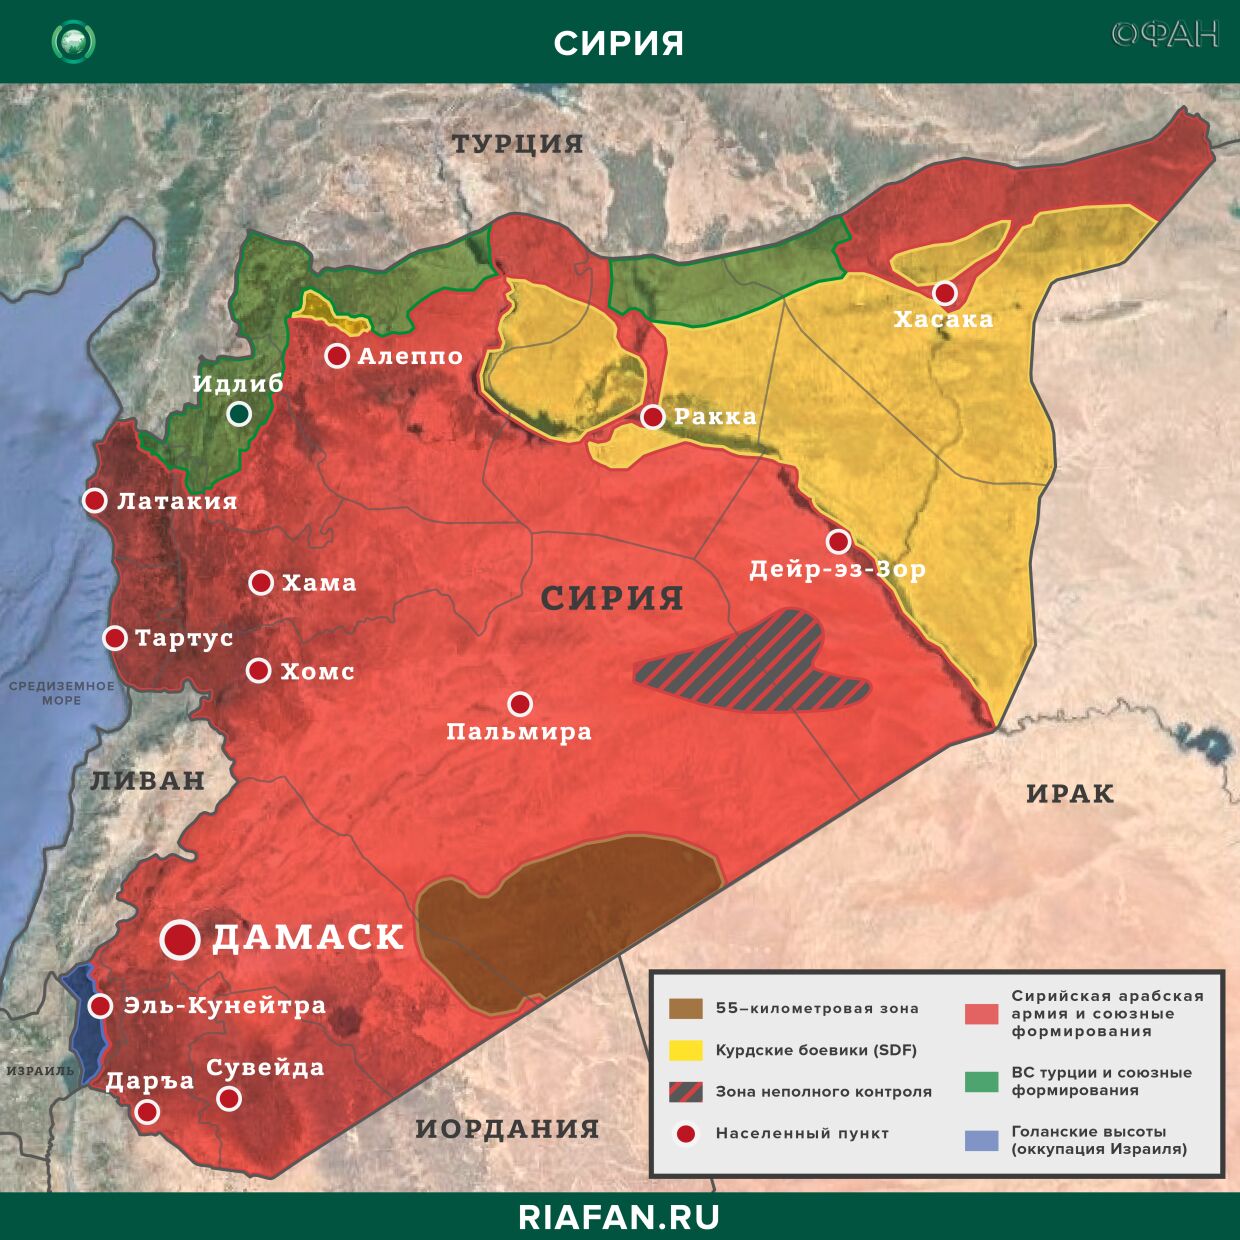 Syria news 9 September 22.30: TsPVS RF announced three humanitarian actions in the SAR